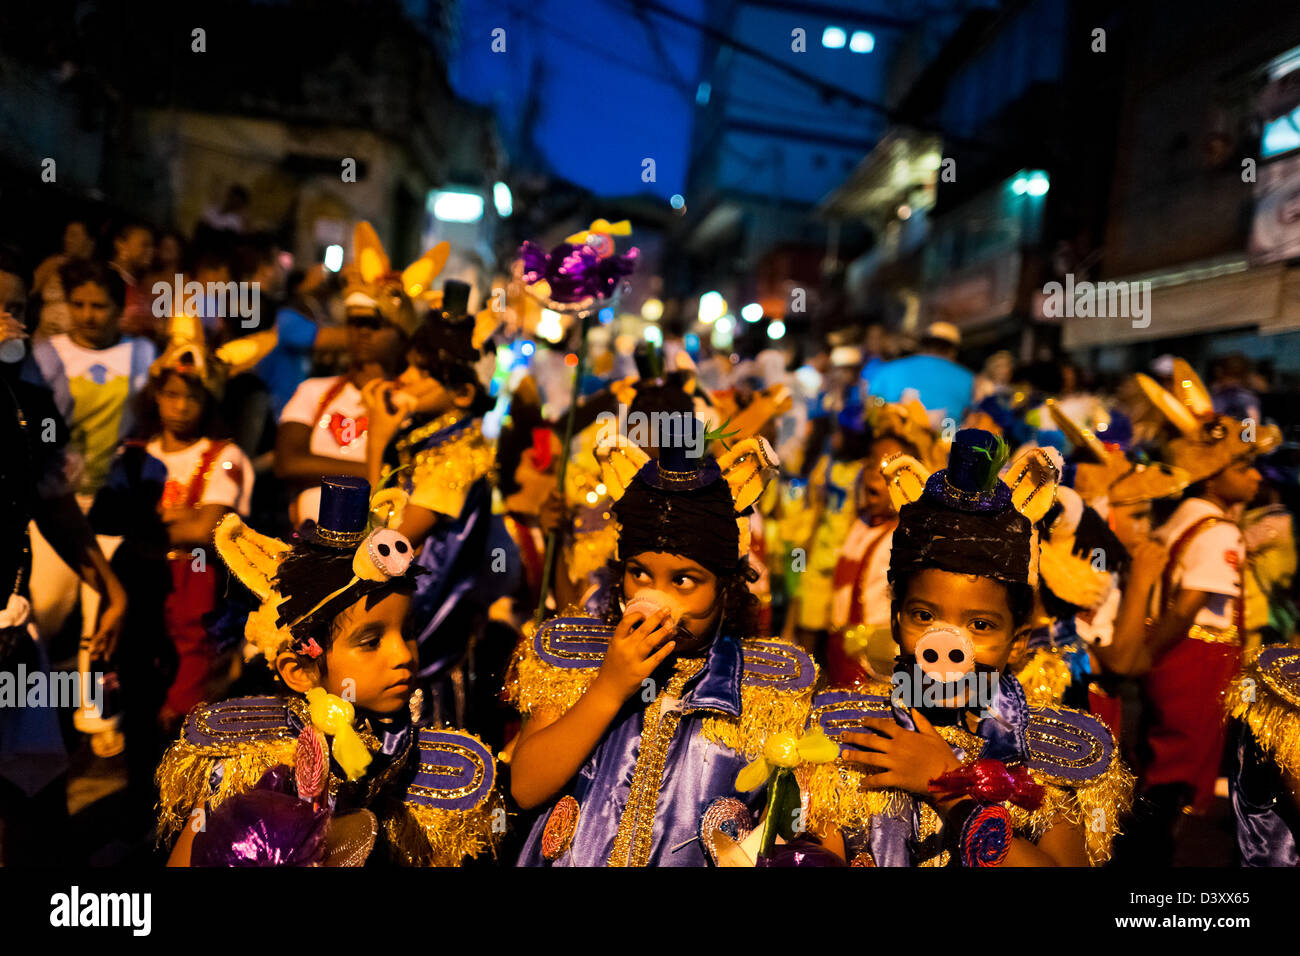 Brazilian children, with colorful costumes, take part in the Carnival parade in the favela of Rocinha, Rio de Janeiro, Brazil. Stock Photo